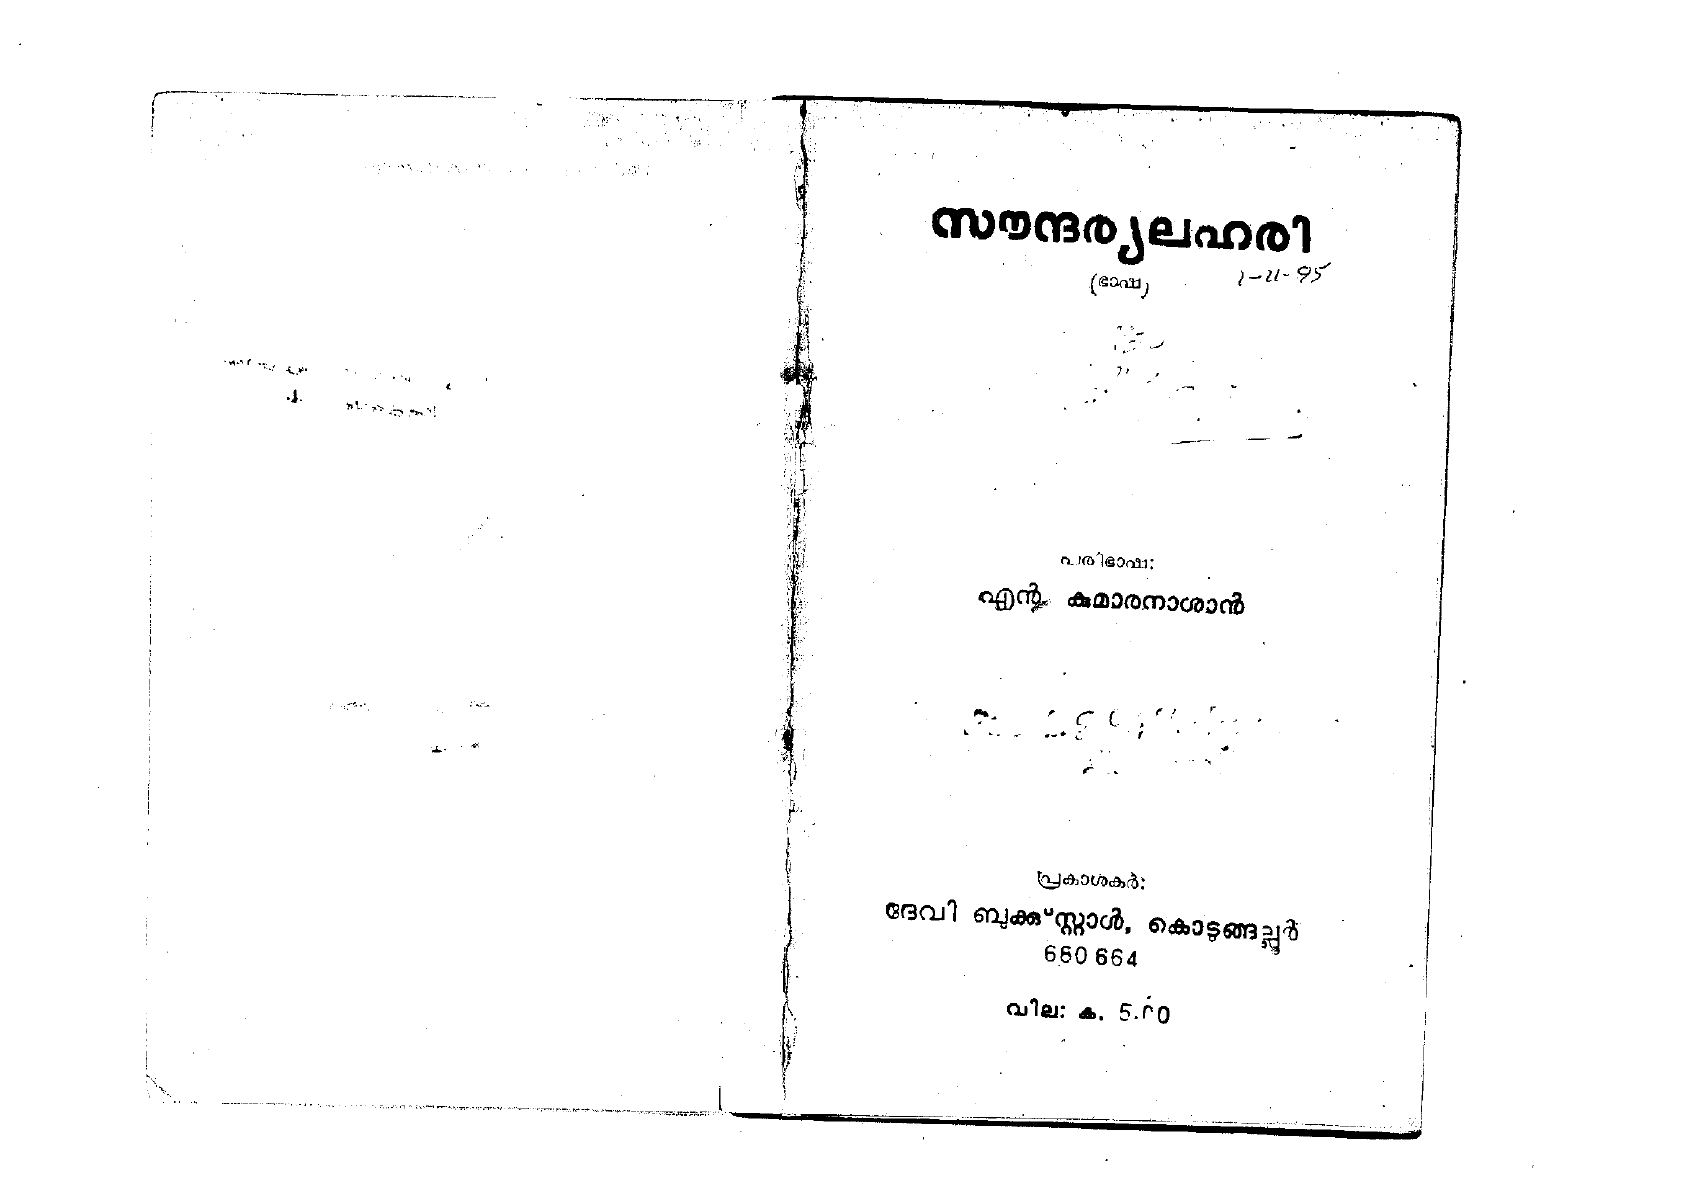 sivananda lahari telugu meaning pdf file